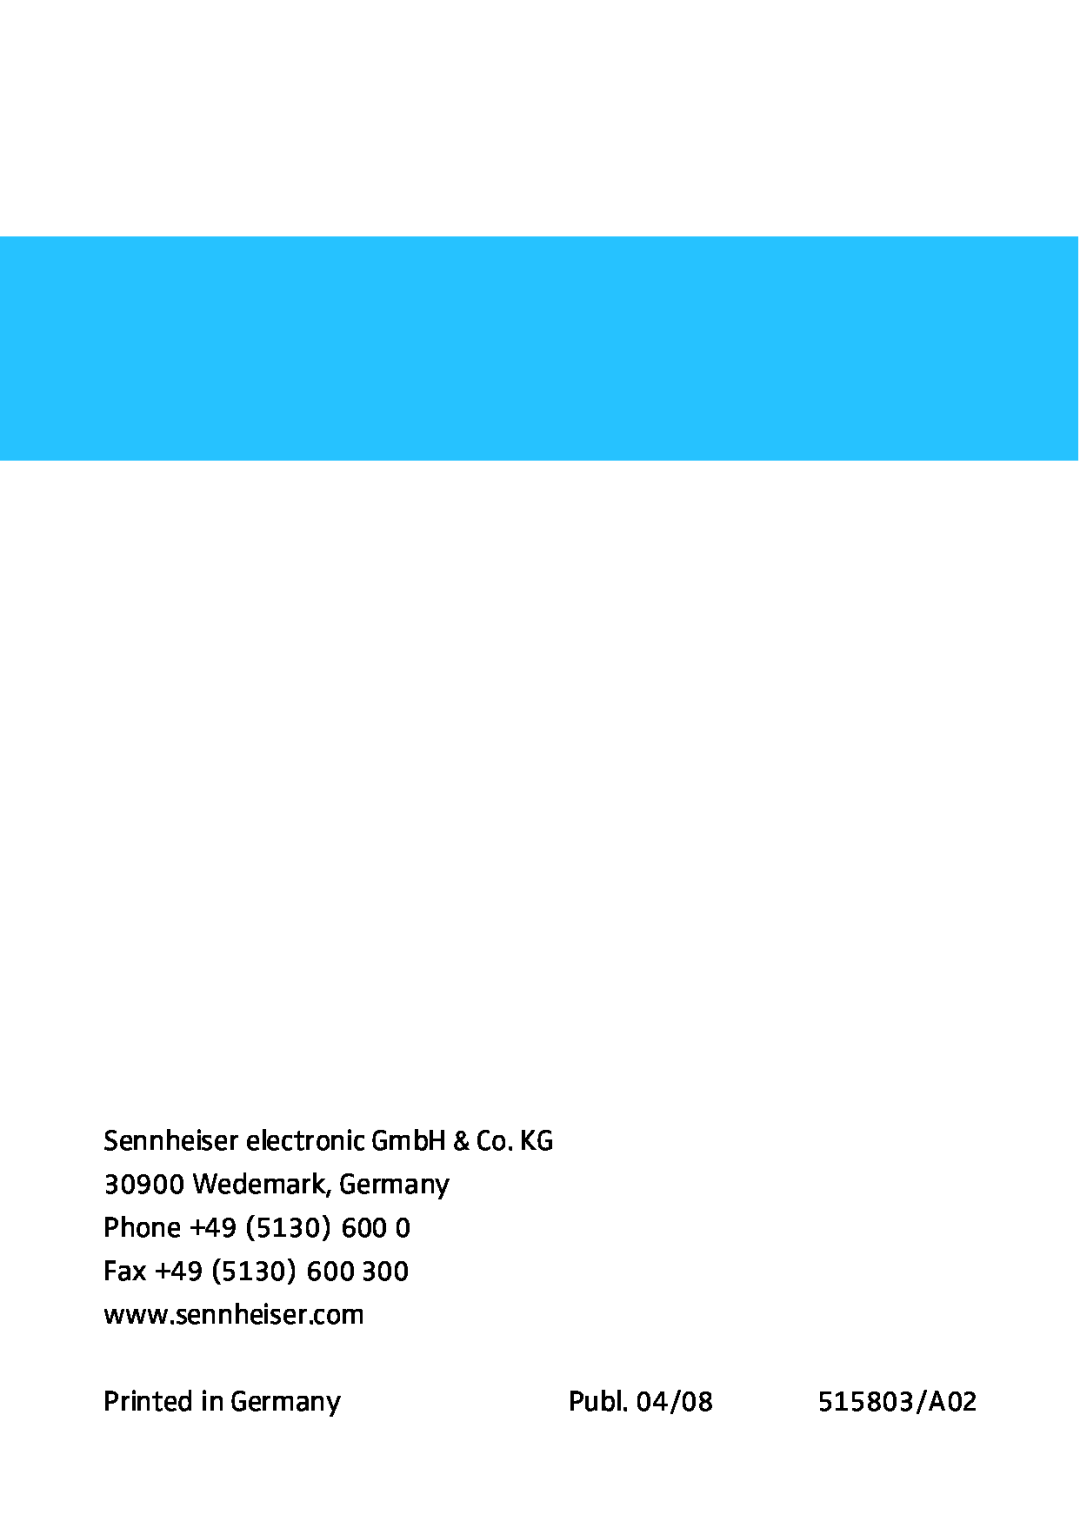 Sennheiser HME 46, HMD 46 manual Printed in Germany, Publ. 04/08, 515803/A02 